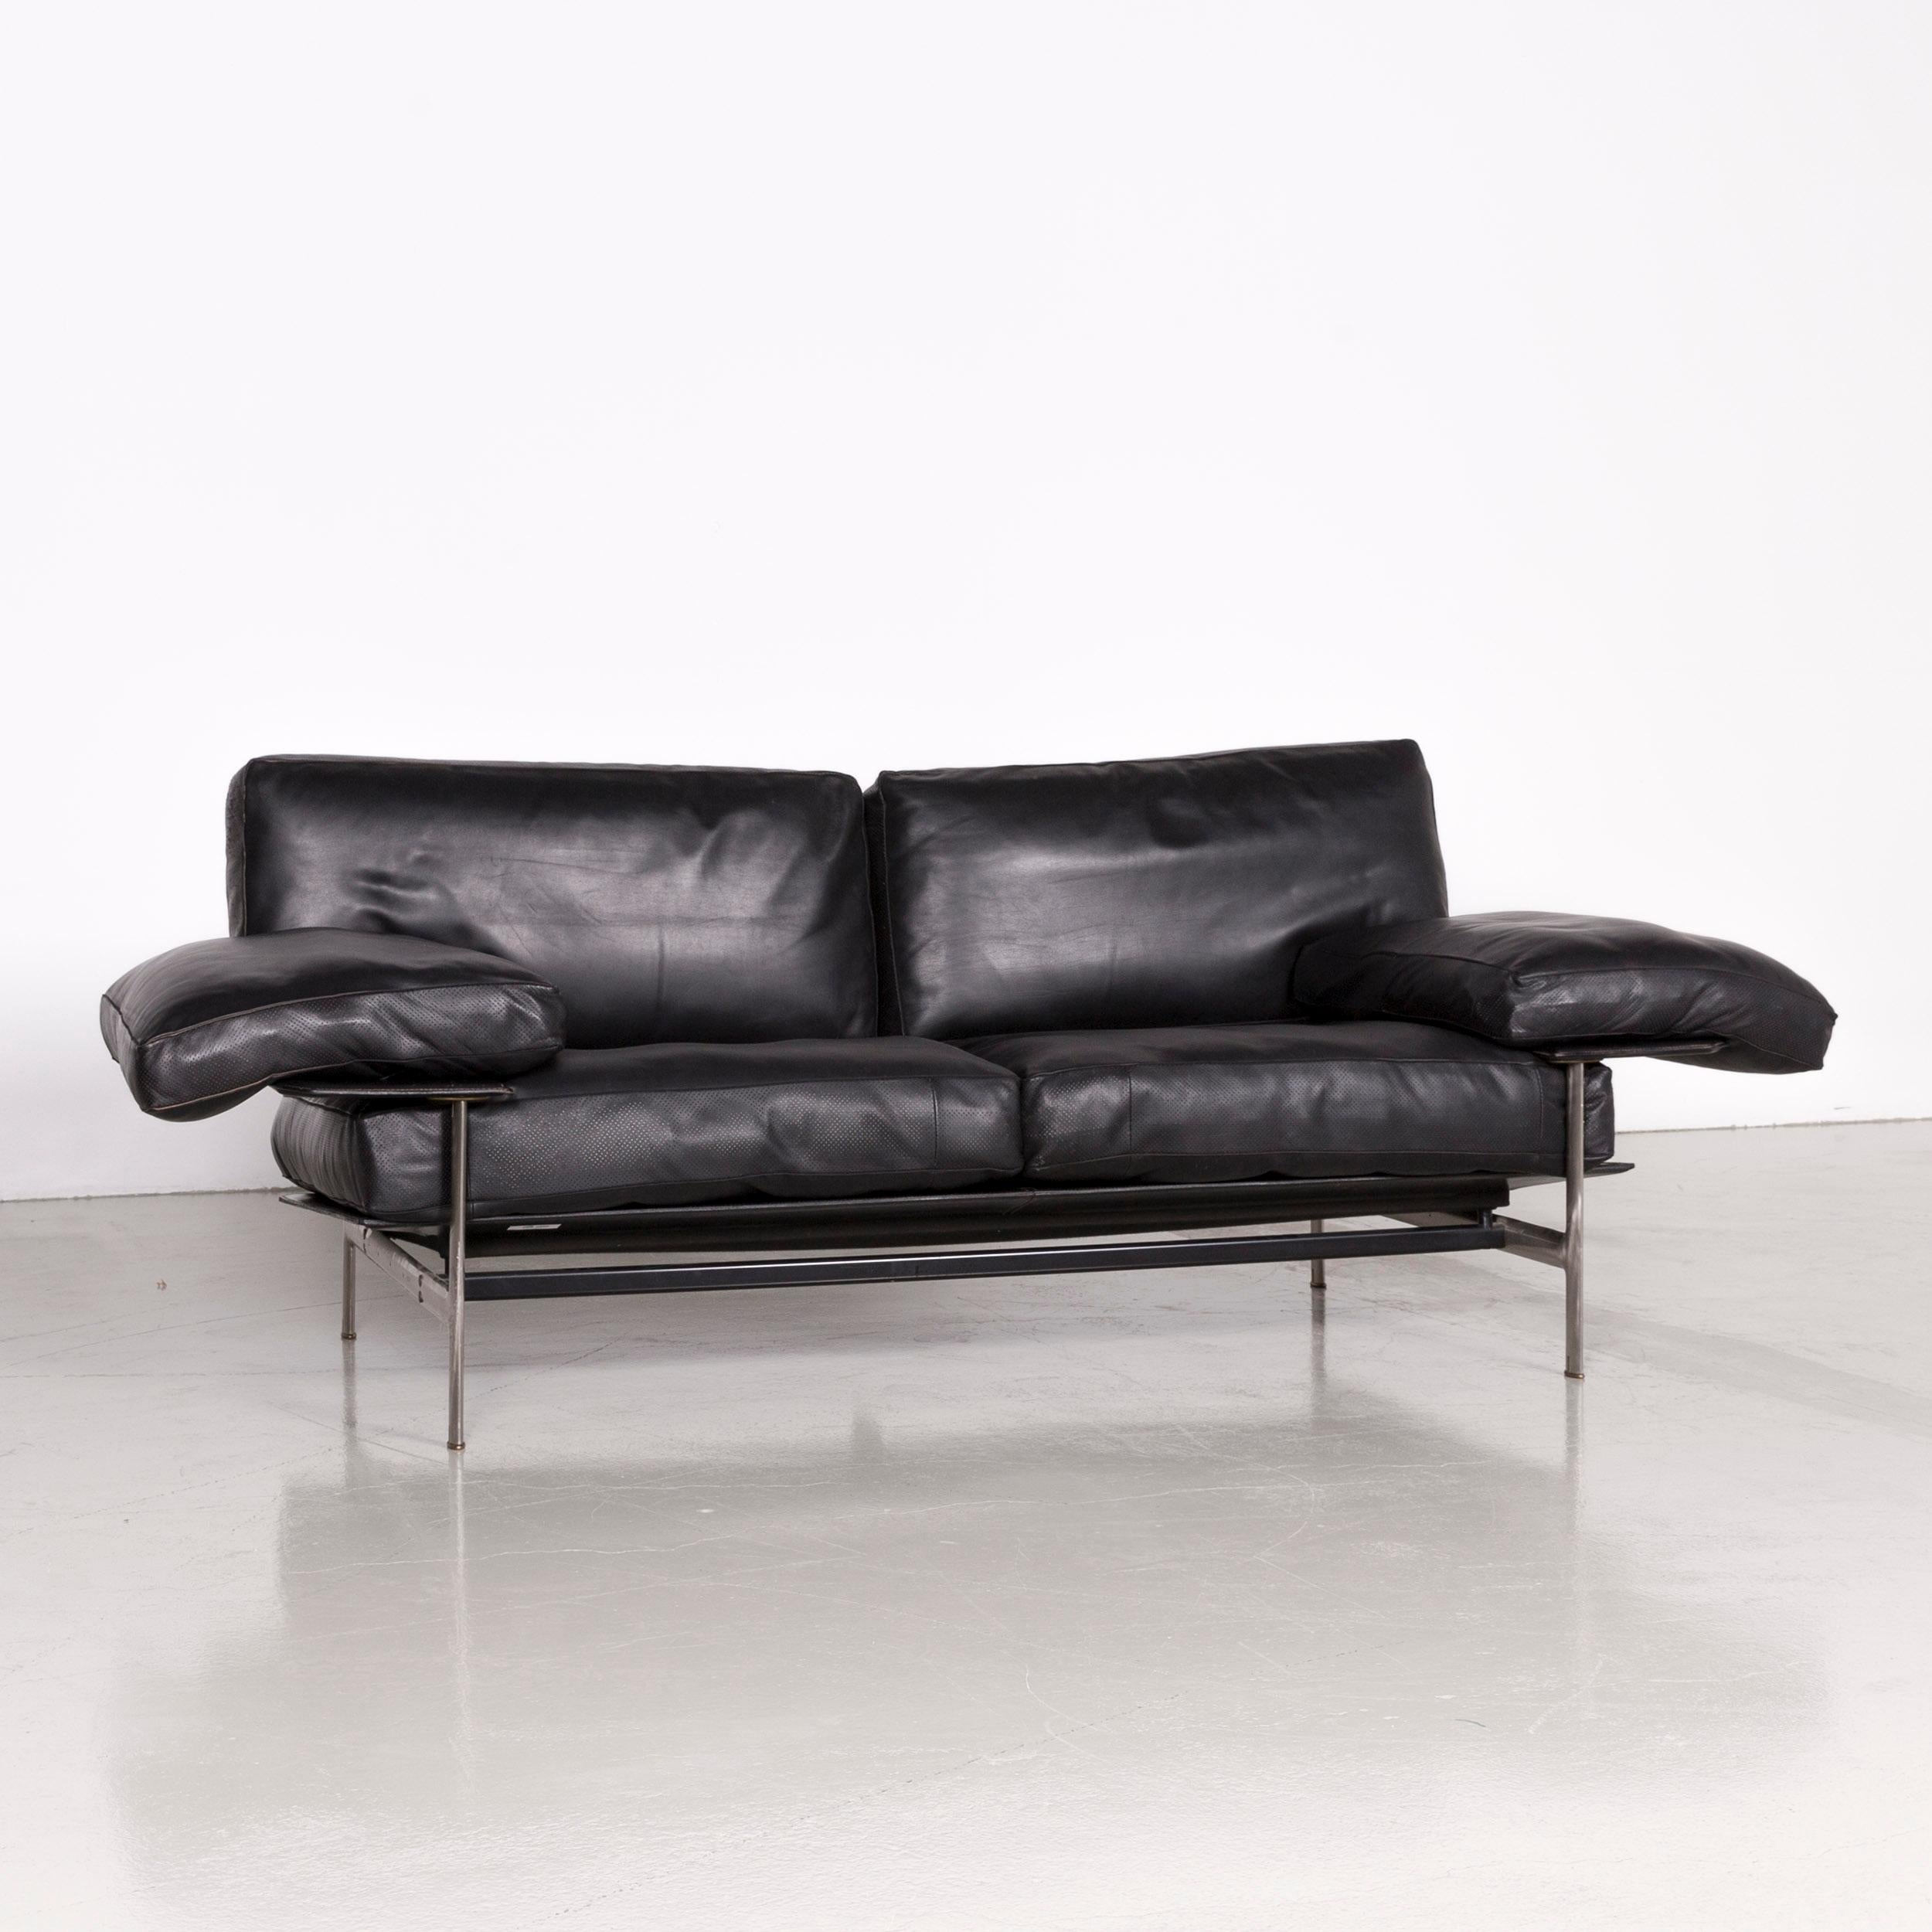 B&B Italia diesis designer sofa leather black three-seat couch modern.